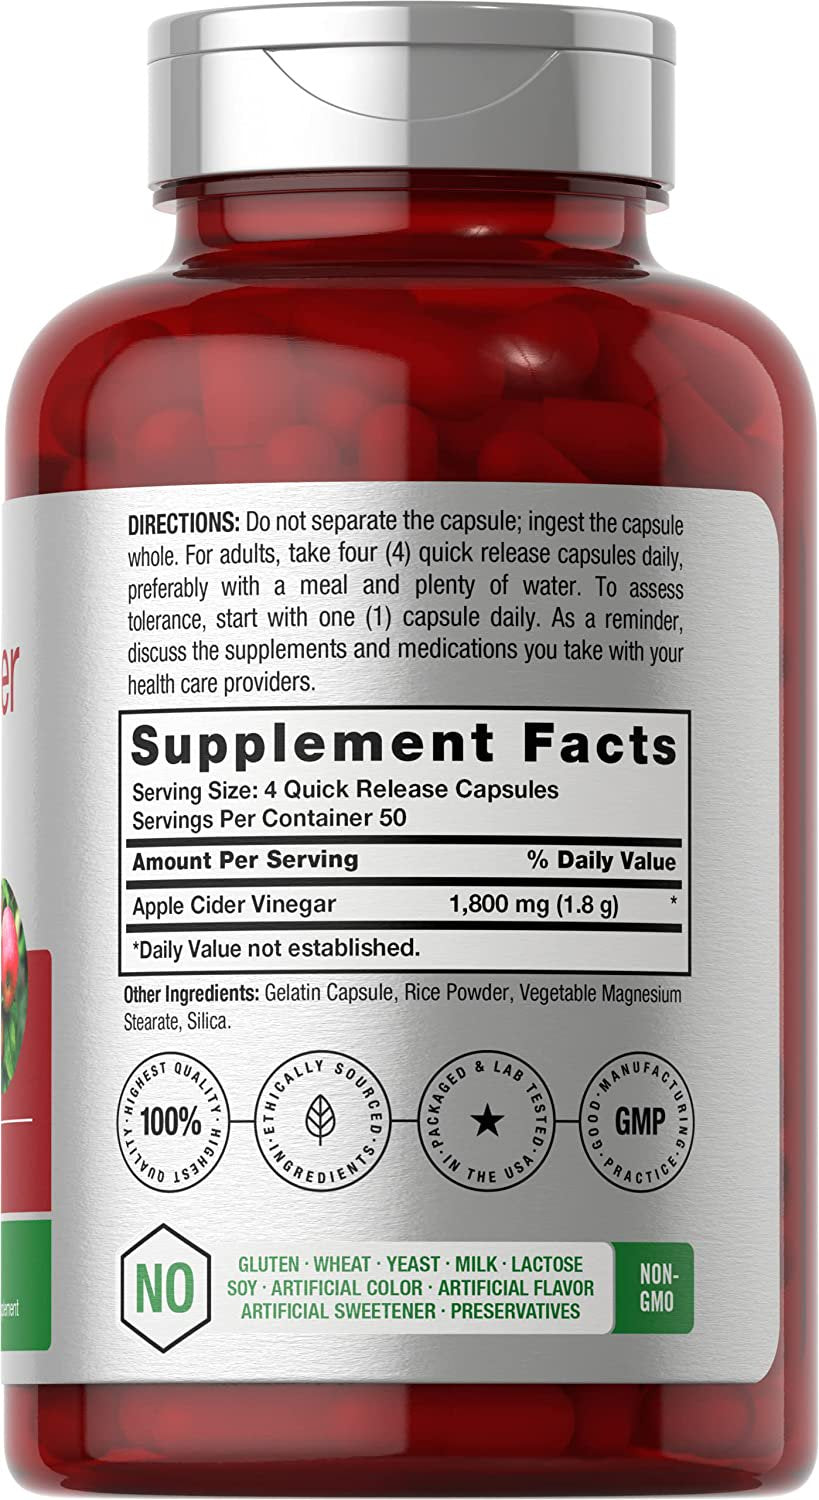 Apple Cider Vinegar Capsules | 1800Mg | 200 Pills | Non-Gmo, Gluten Free Supplement | by Horbaach